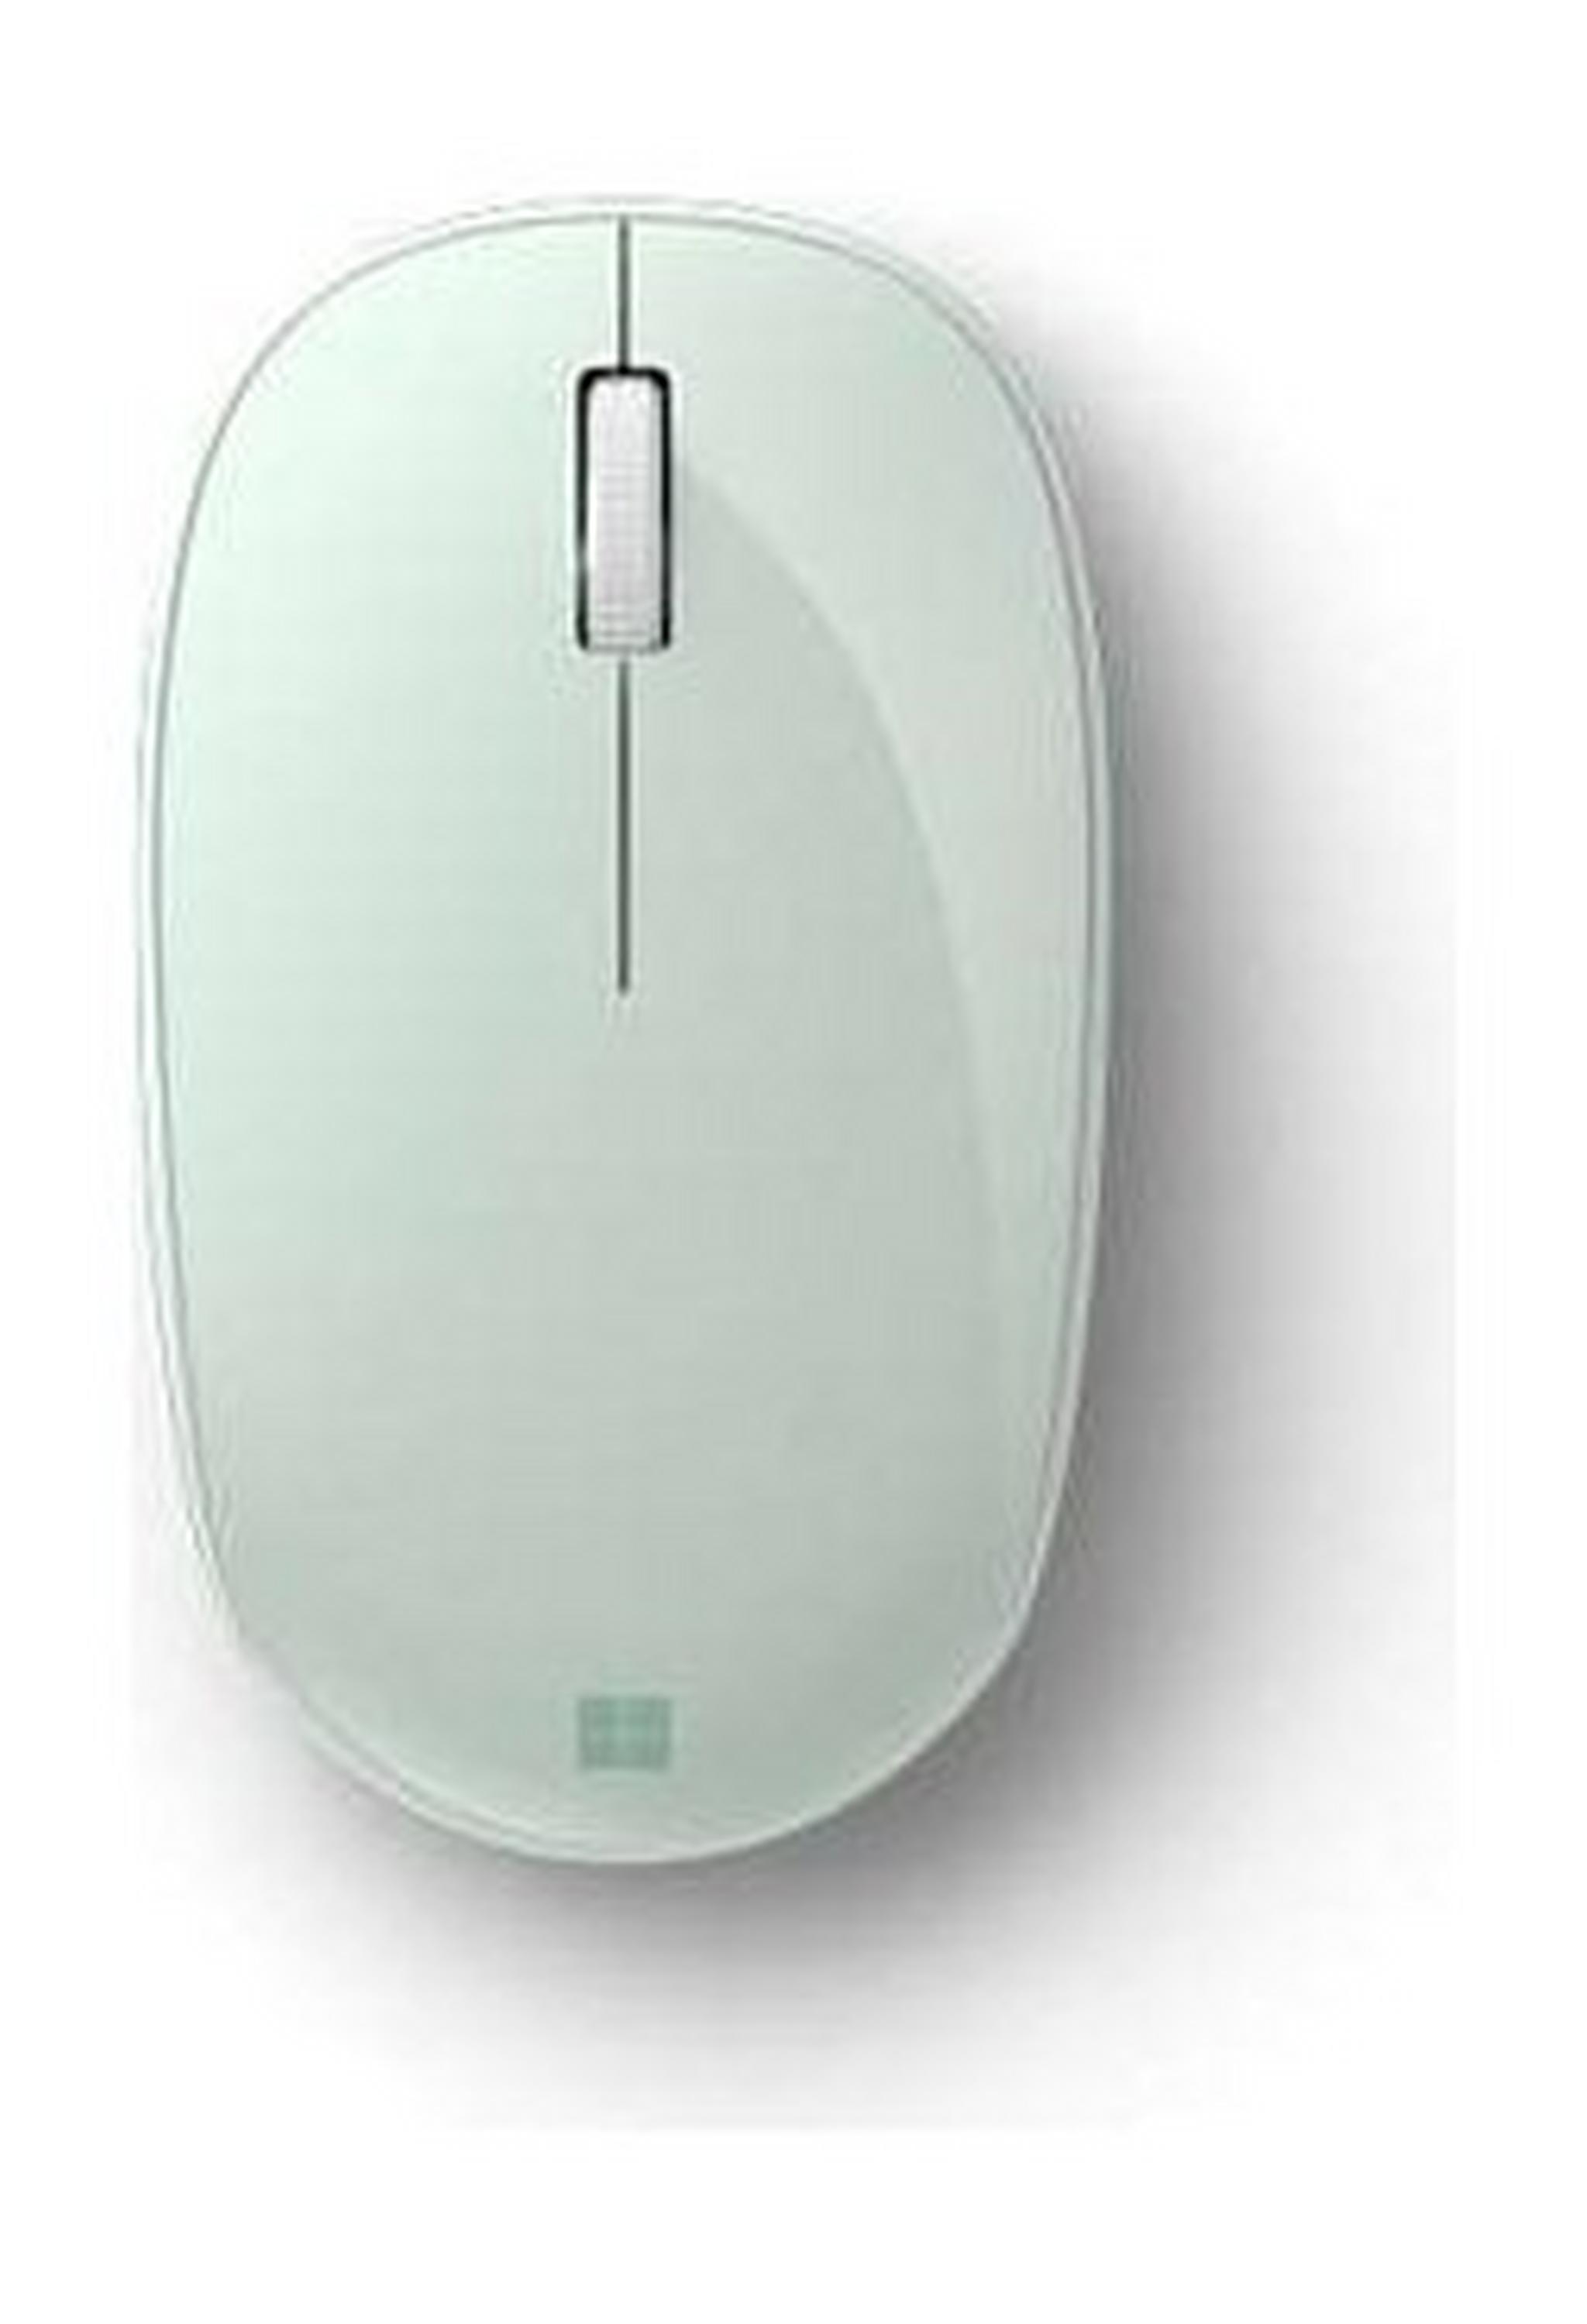 Microsoft Wireless Bluetooth Mouse - Mint